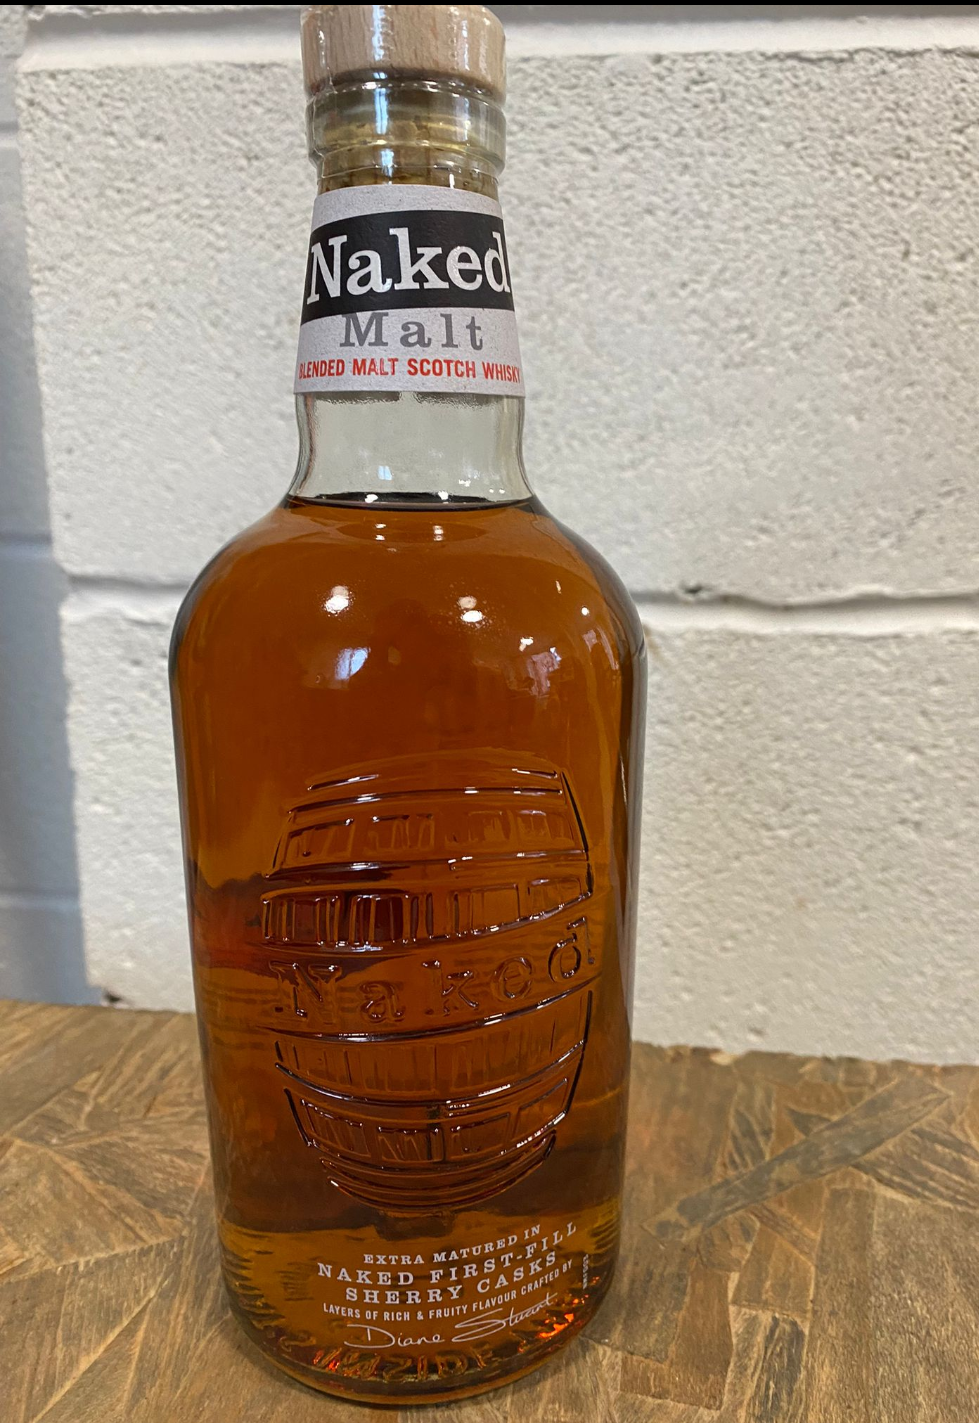 Naked Malt Blended Malt Scotch Whisky Alcohol (70cl, 40%). RRP £28.99